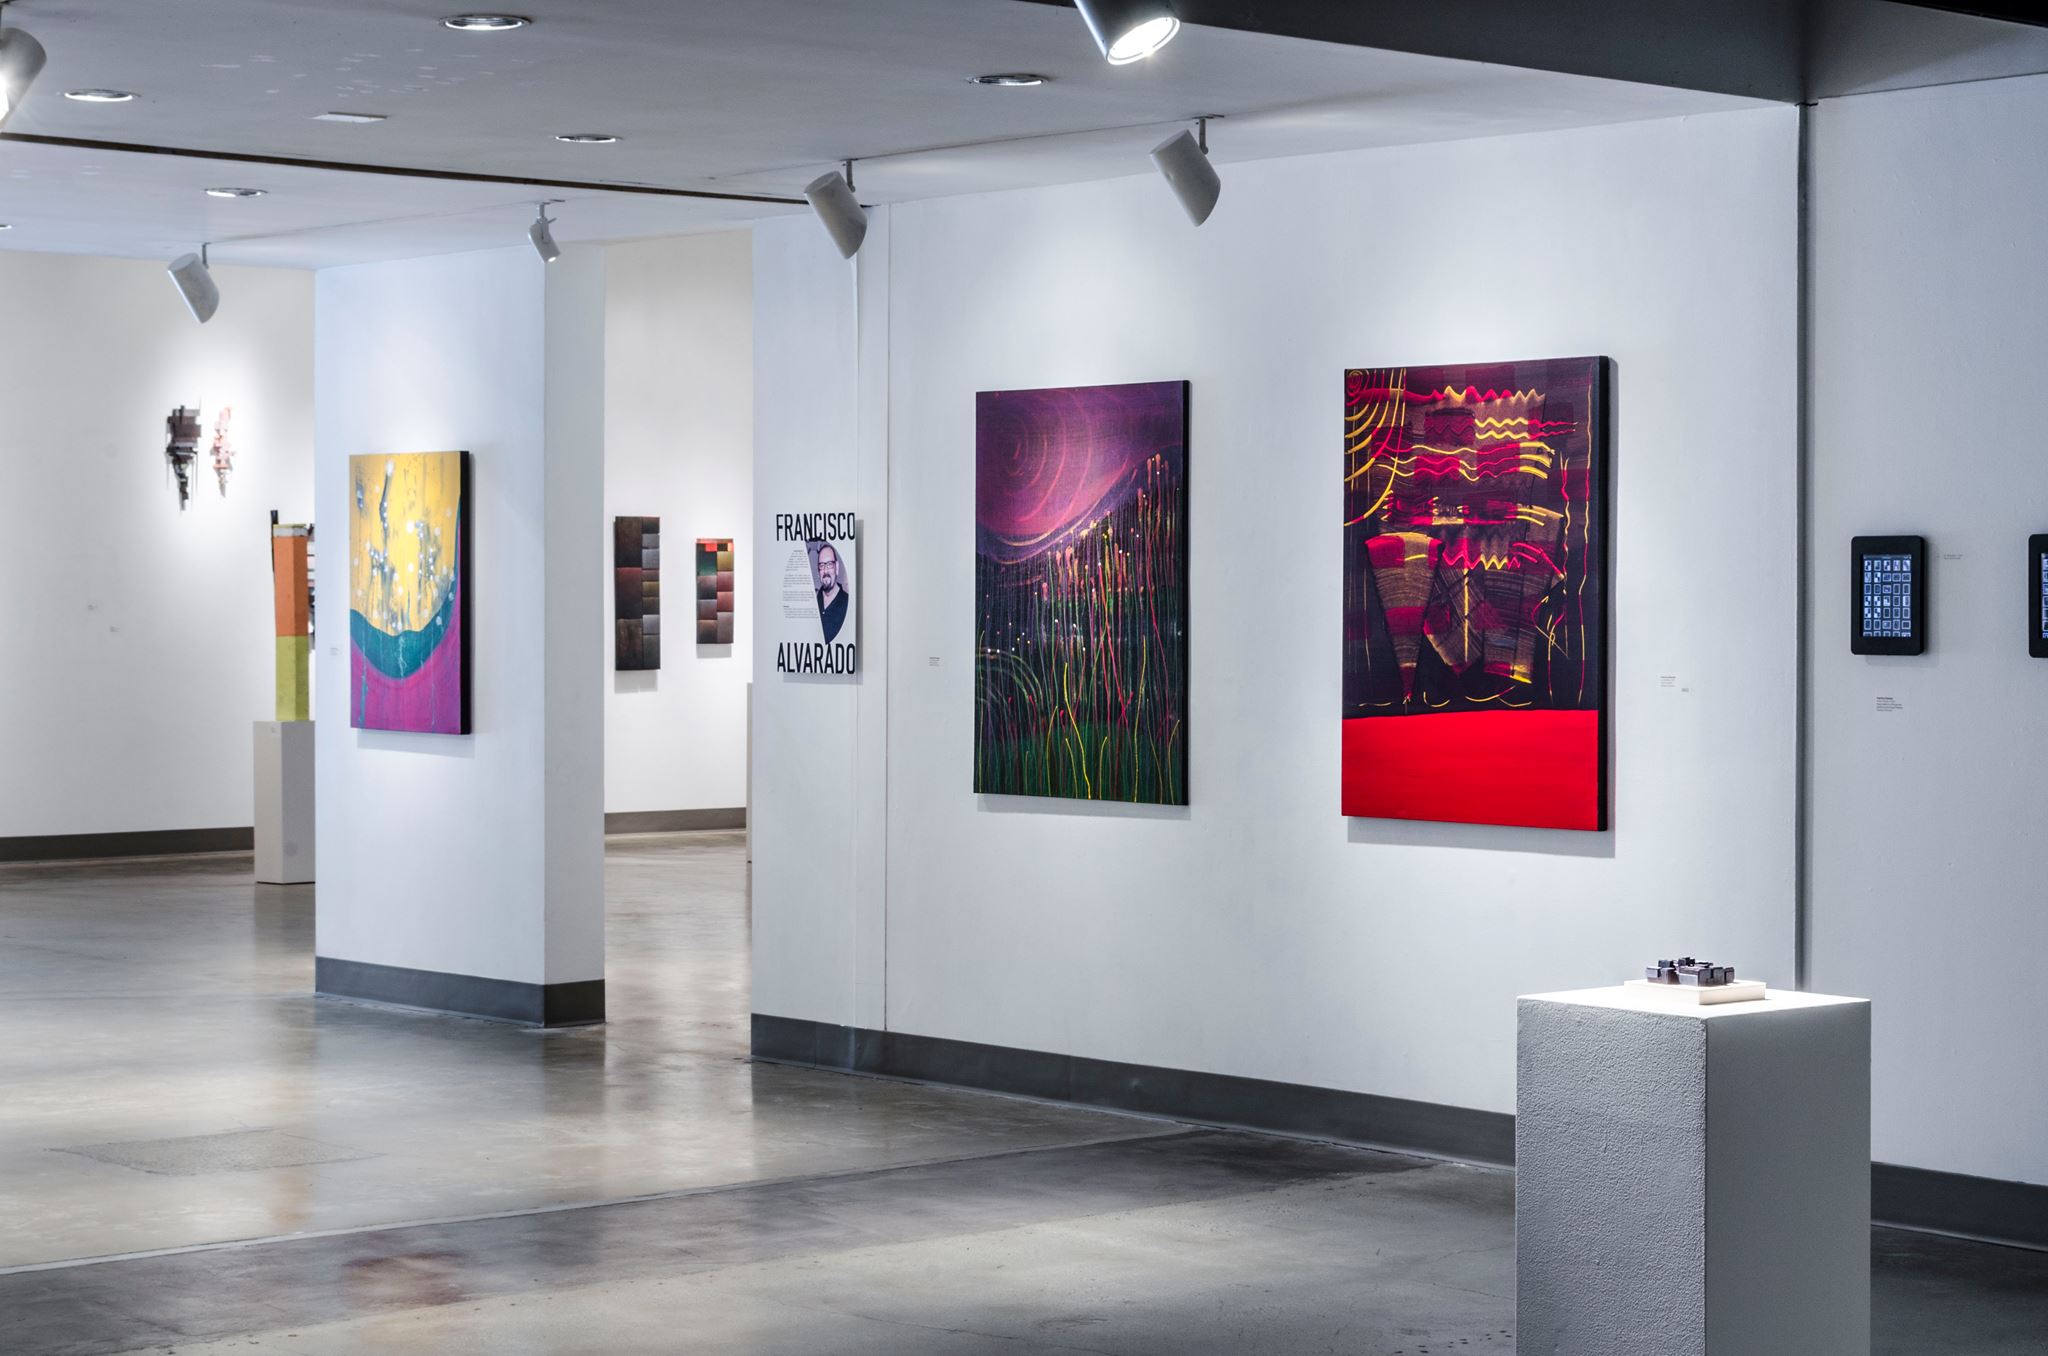 Installation View, Corridor of Gallery, Francisco Alvarado, Patricia Liverman, Karin Skiba & Jim Zver Exhibition, July 7, 2014 to August 16, 2014